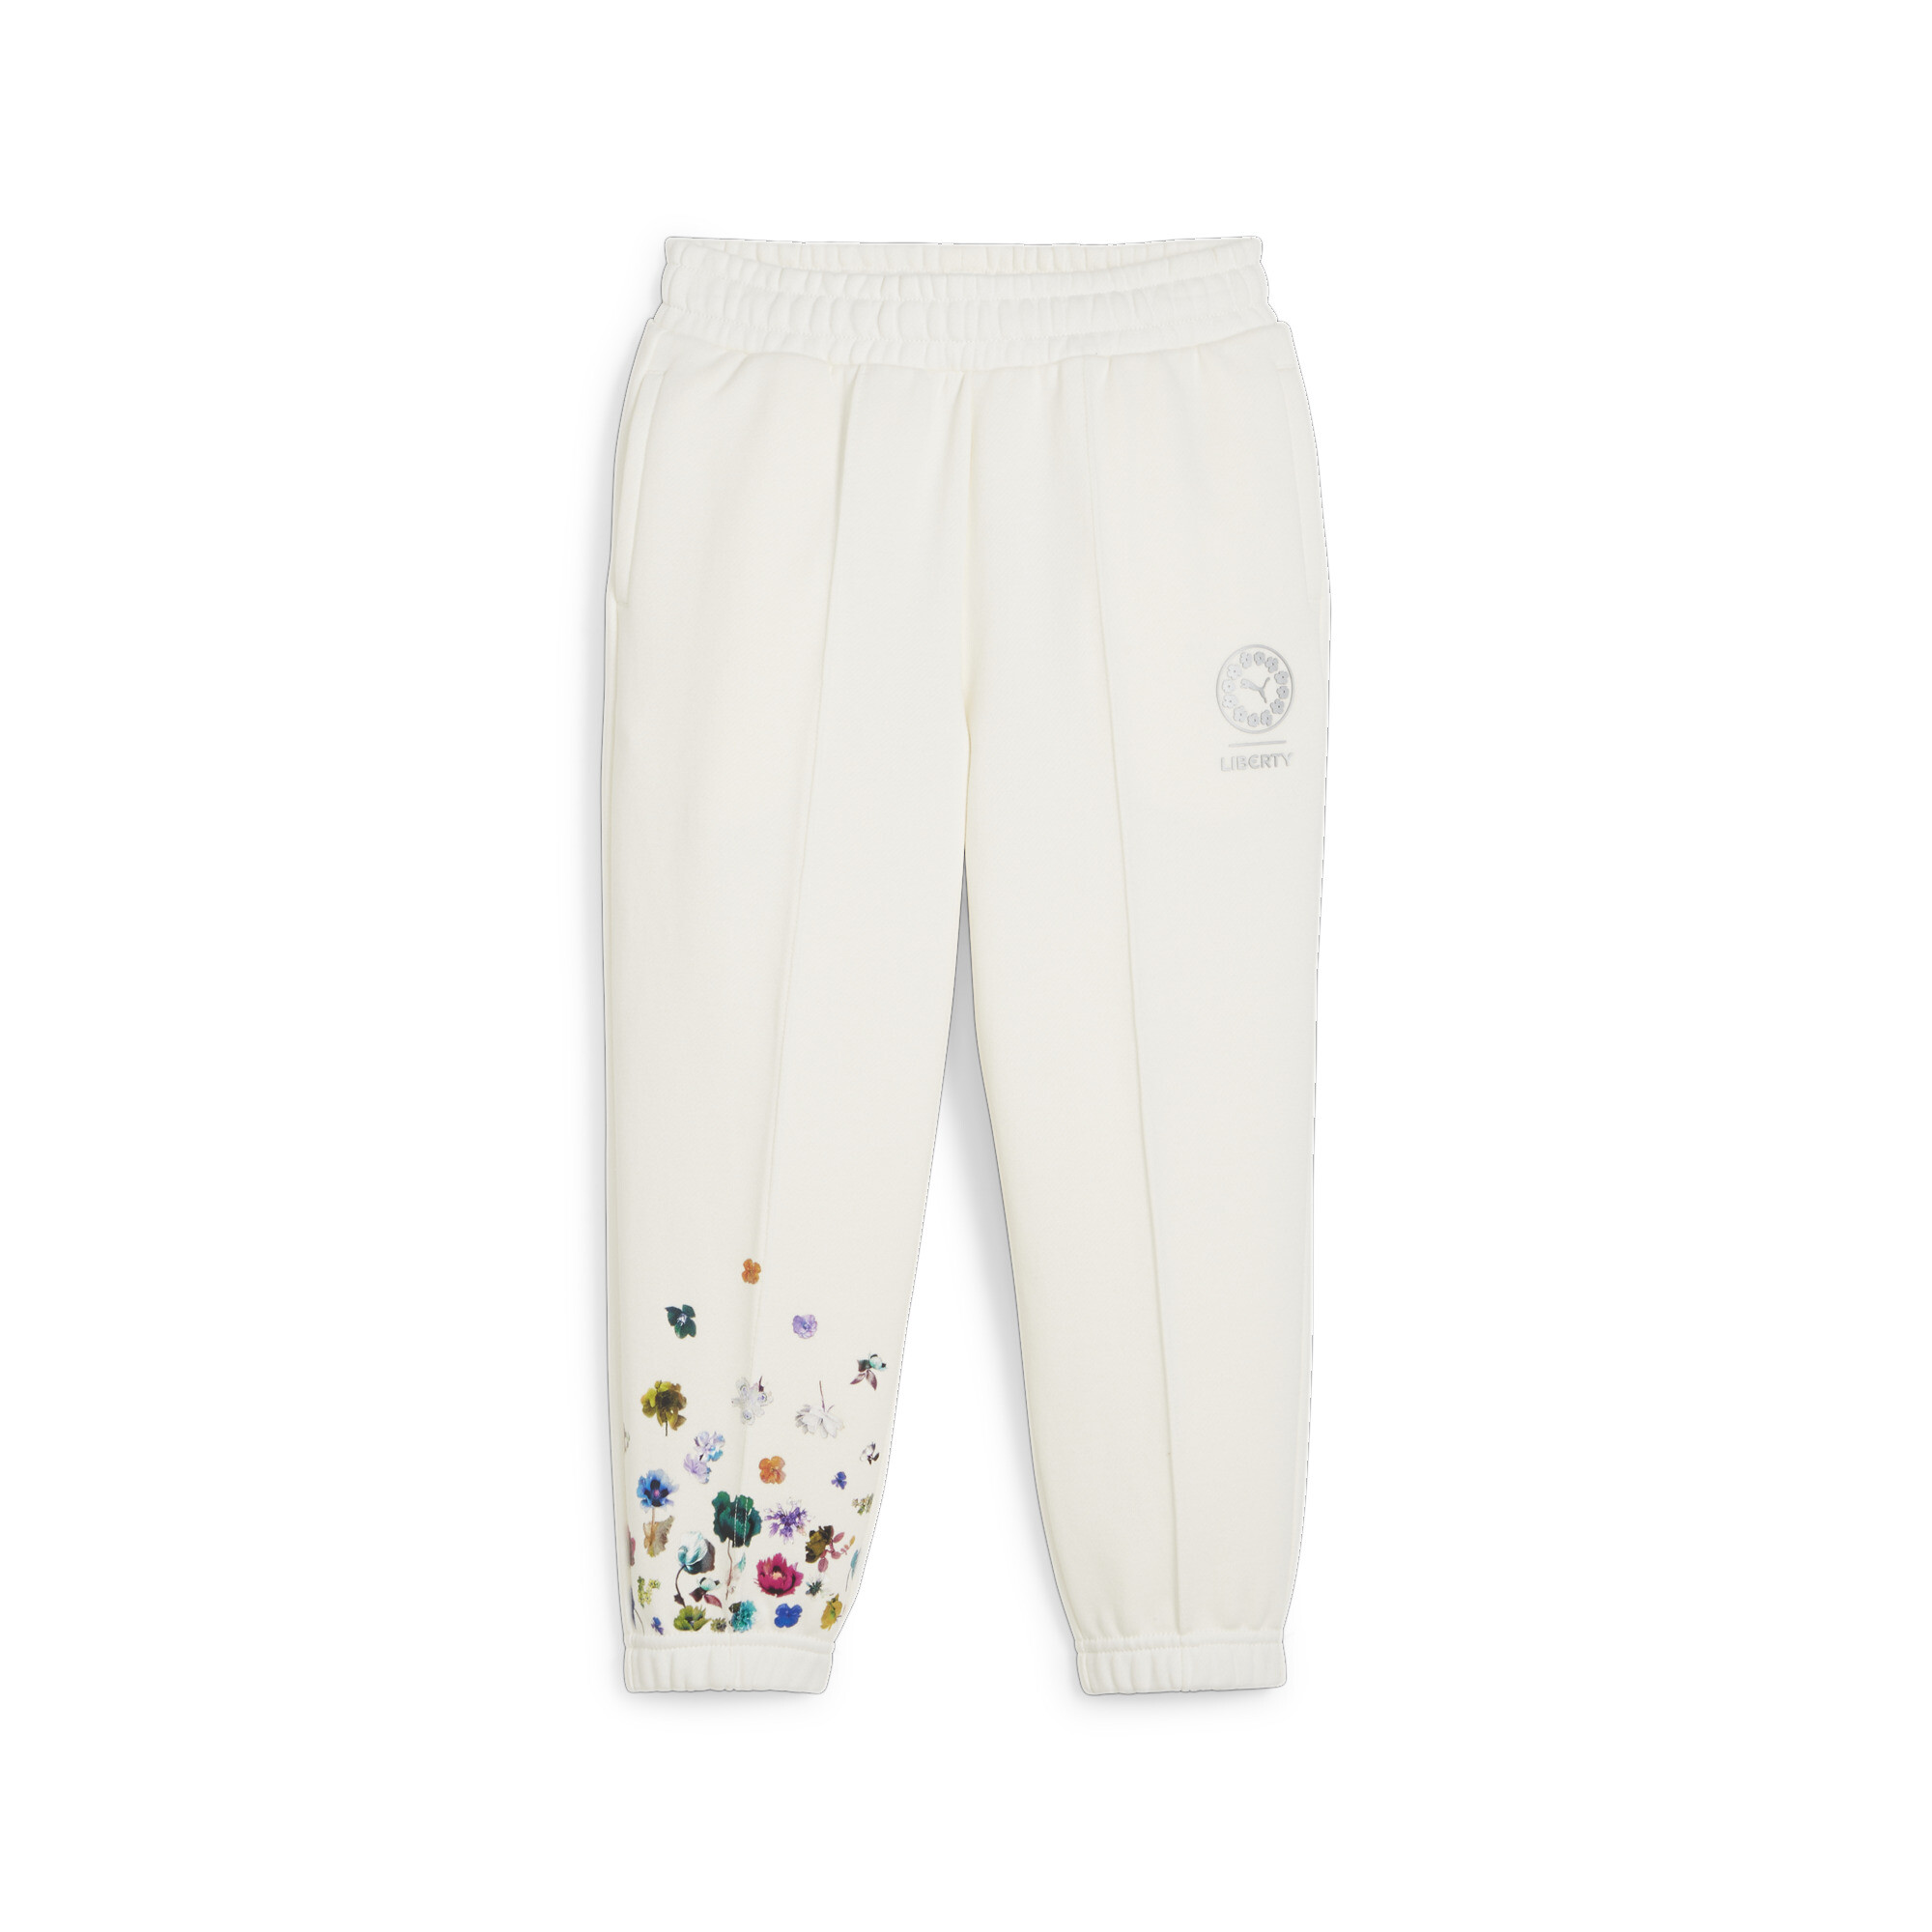 PUMA X LIBERTY Sweatpants In White, Size 7-8 Youth